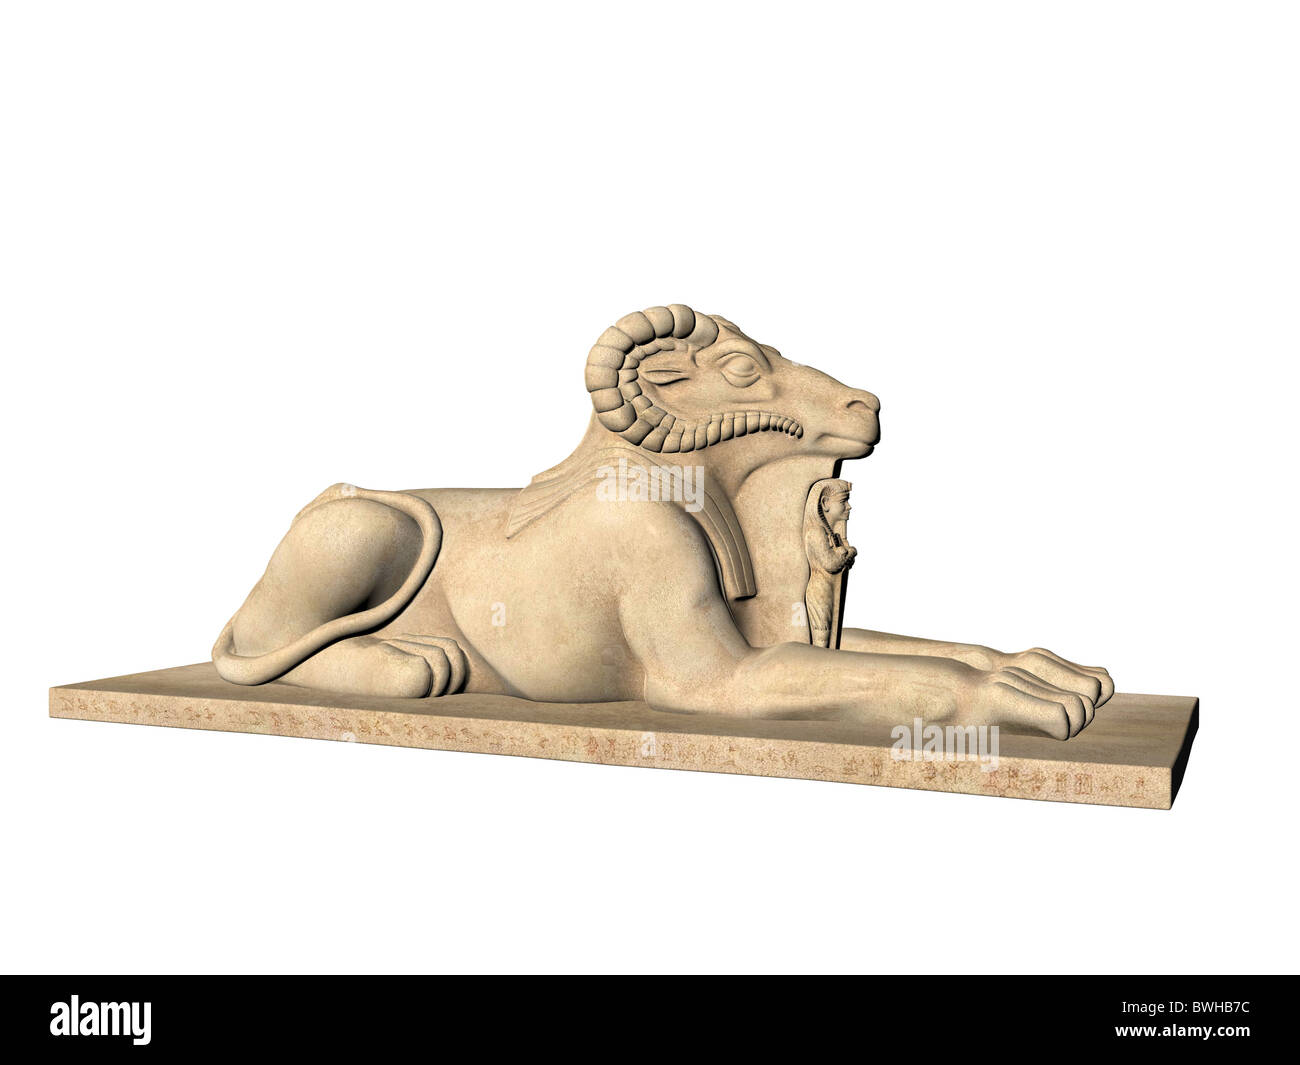 3D illustration of ancient Egyptian god Amun Stock Photo